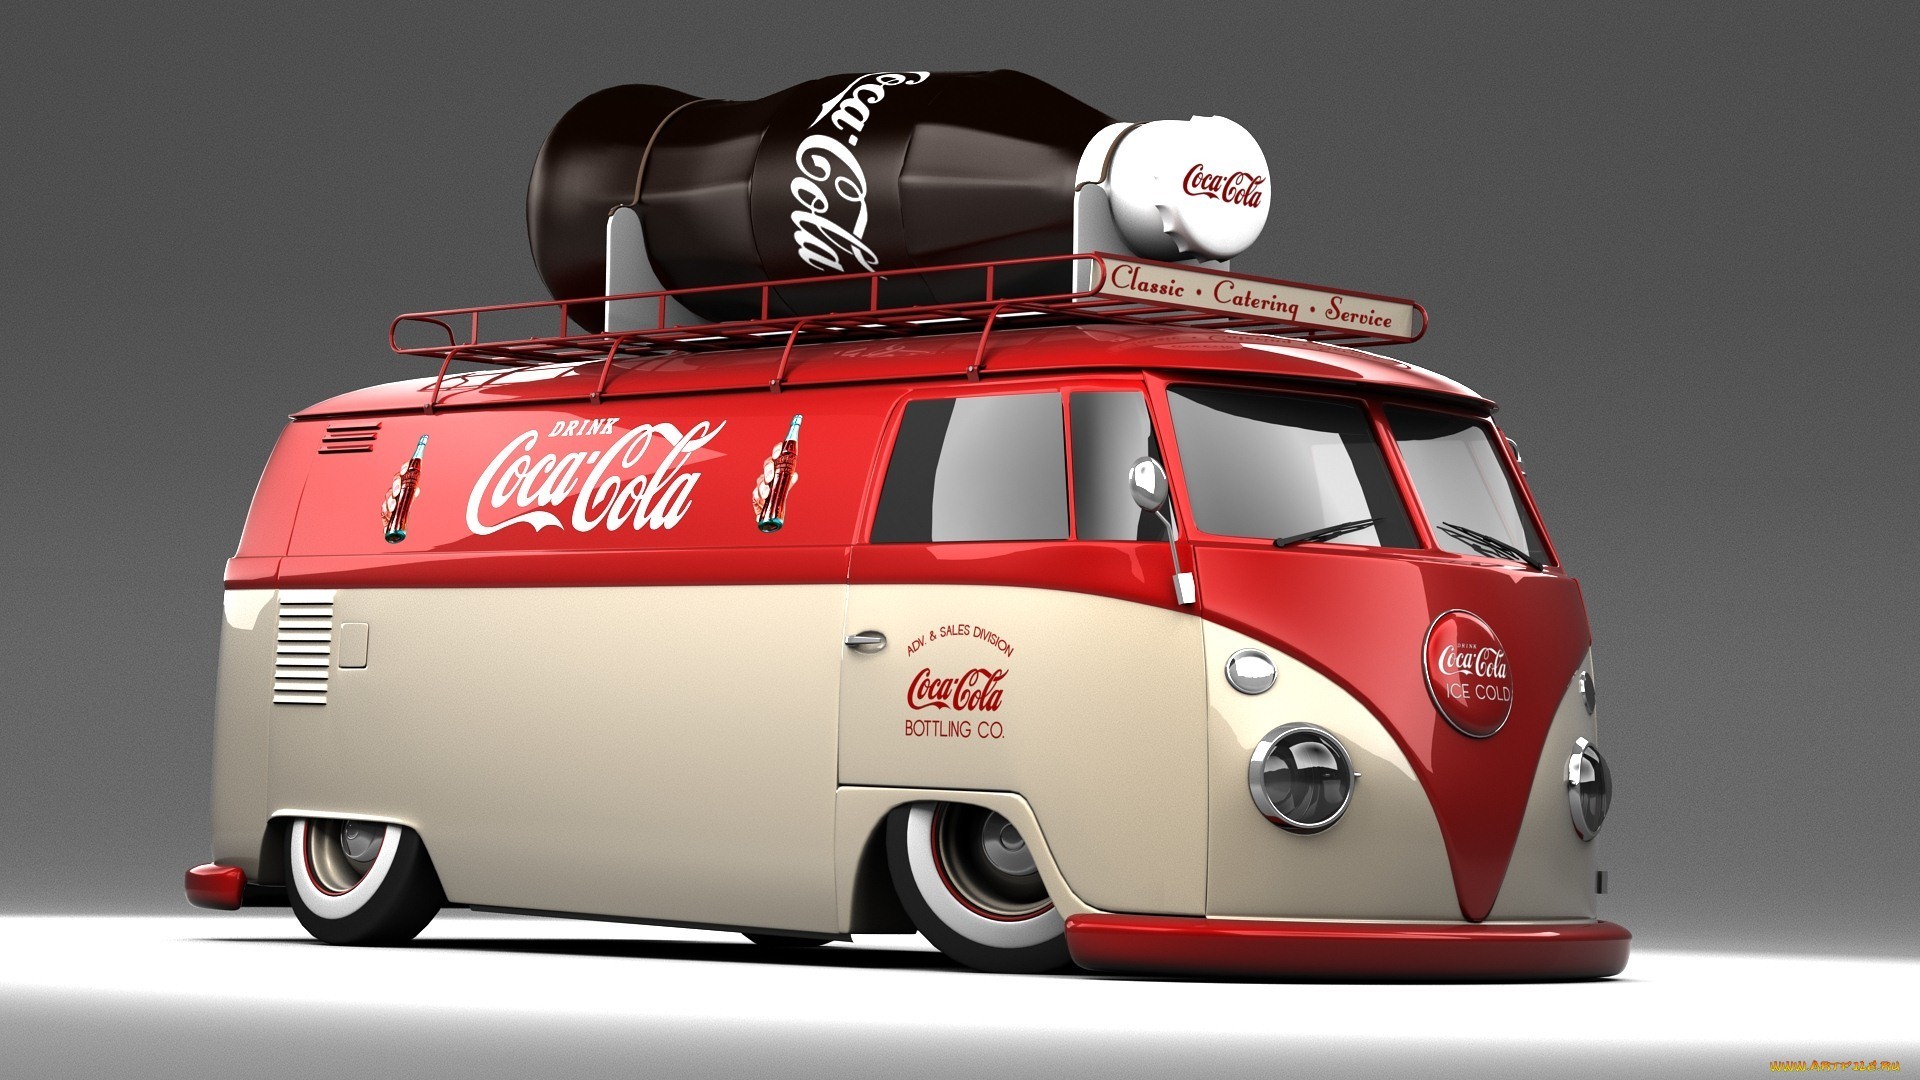 volkswagen, Bus, Volkswagen, Classic, Car, Classic, Coca cola, Coke, Tuning, Coca, Cola, Products Wallpaper